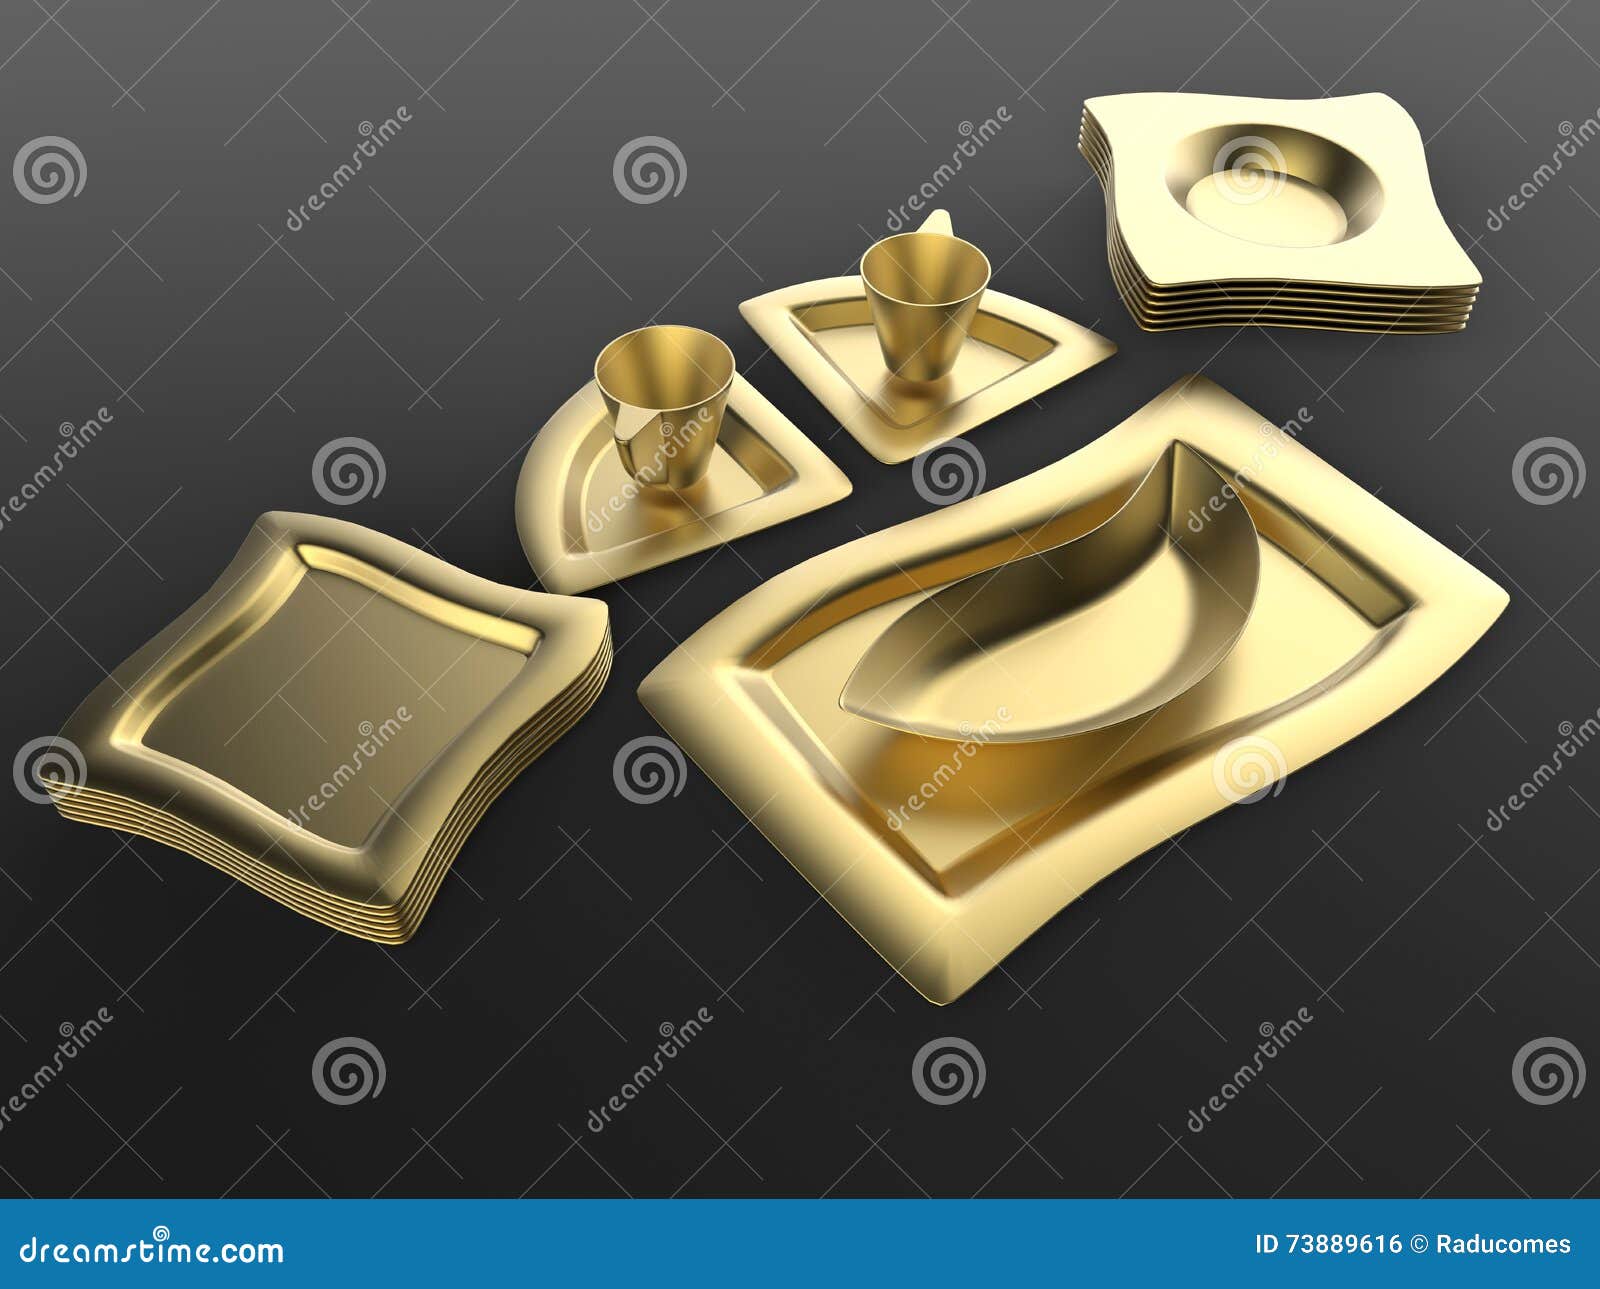 Golden kitchenware stock illustration. Illustration of fashioned ...